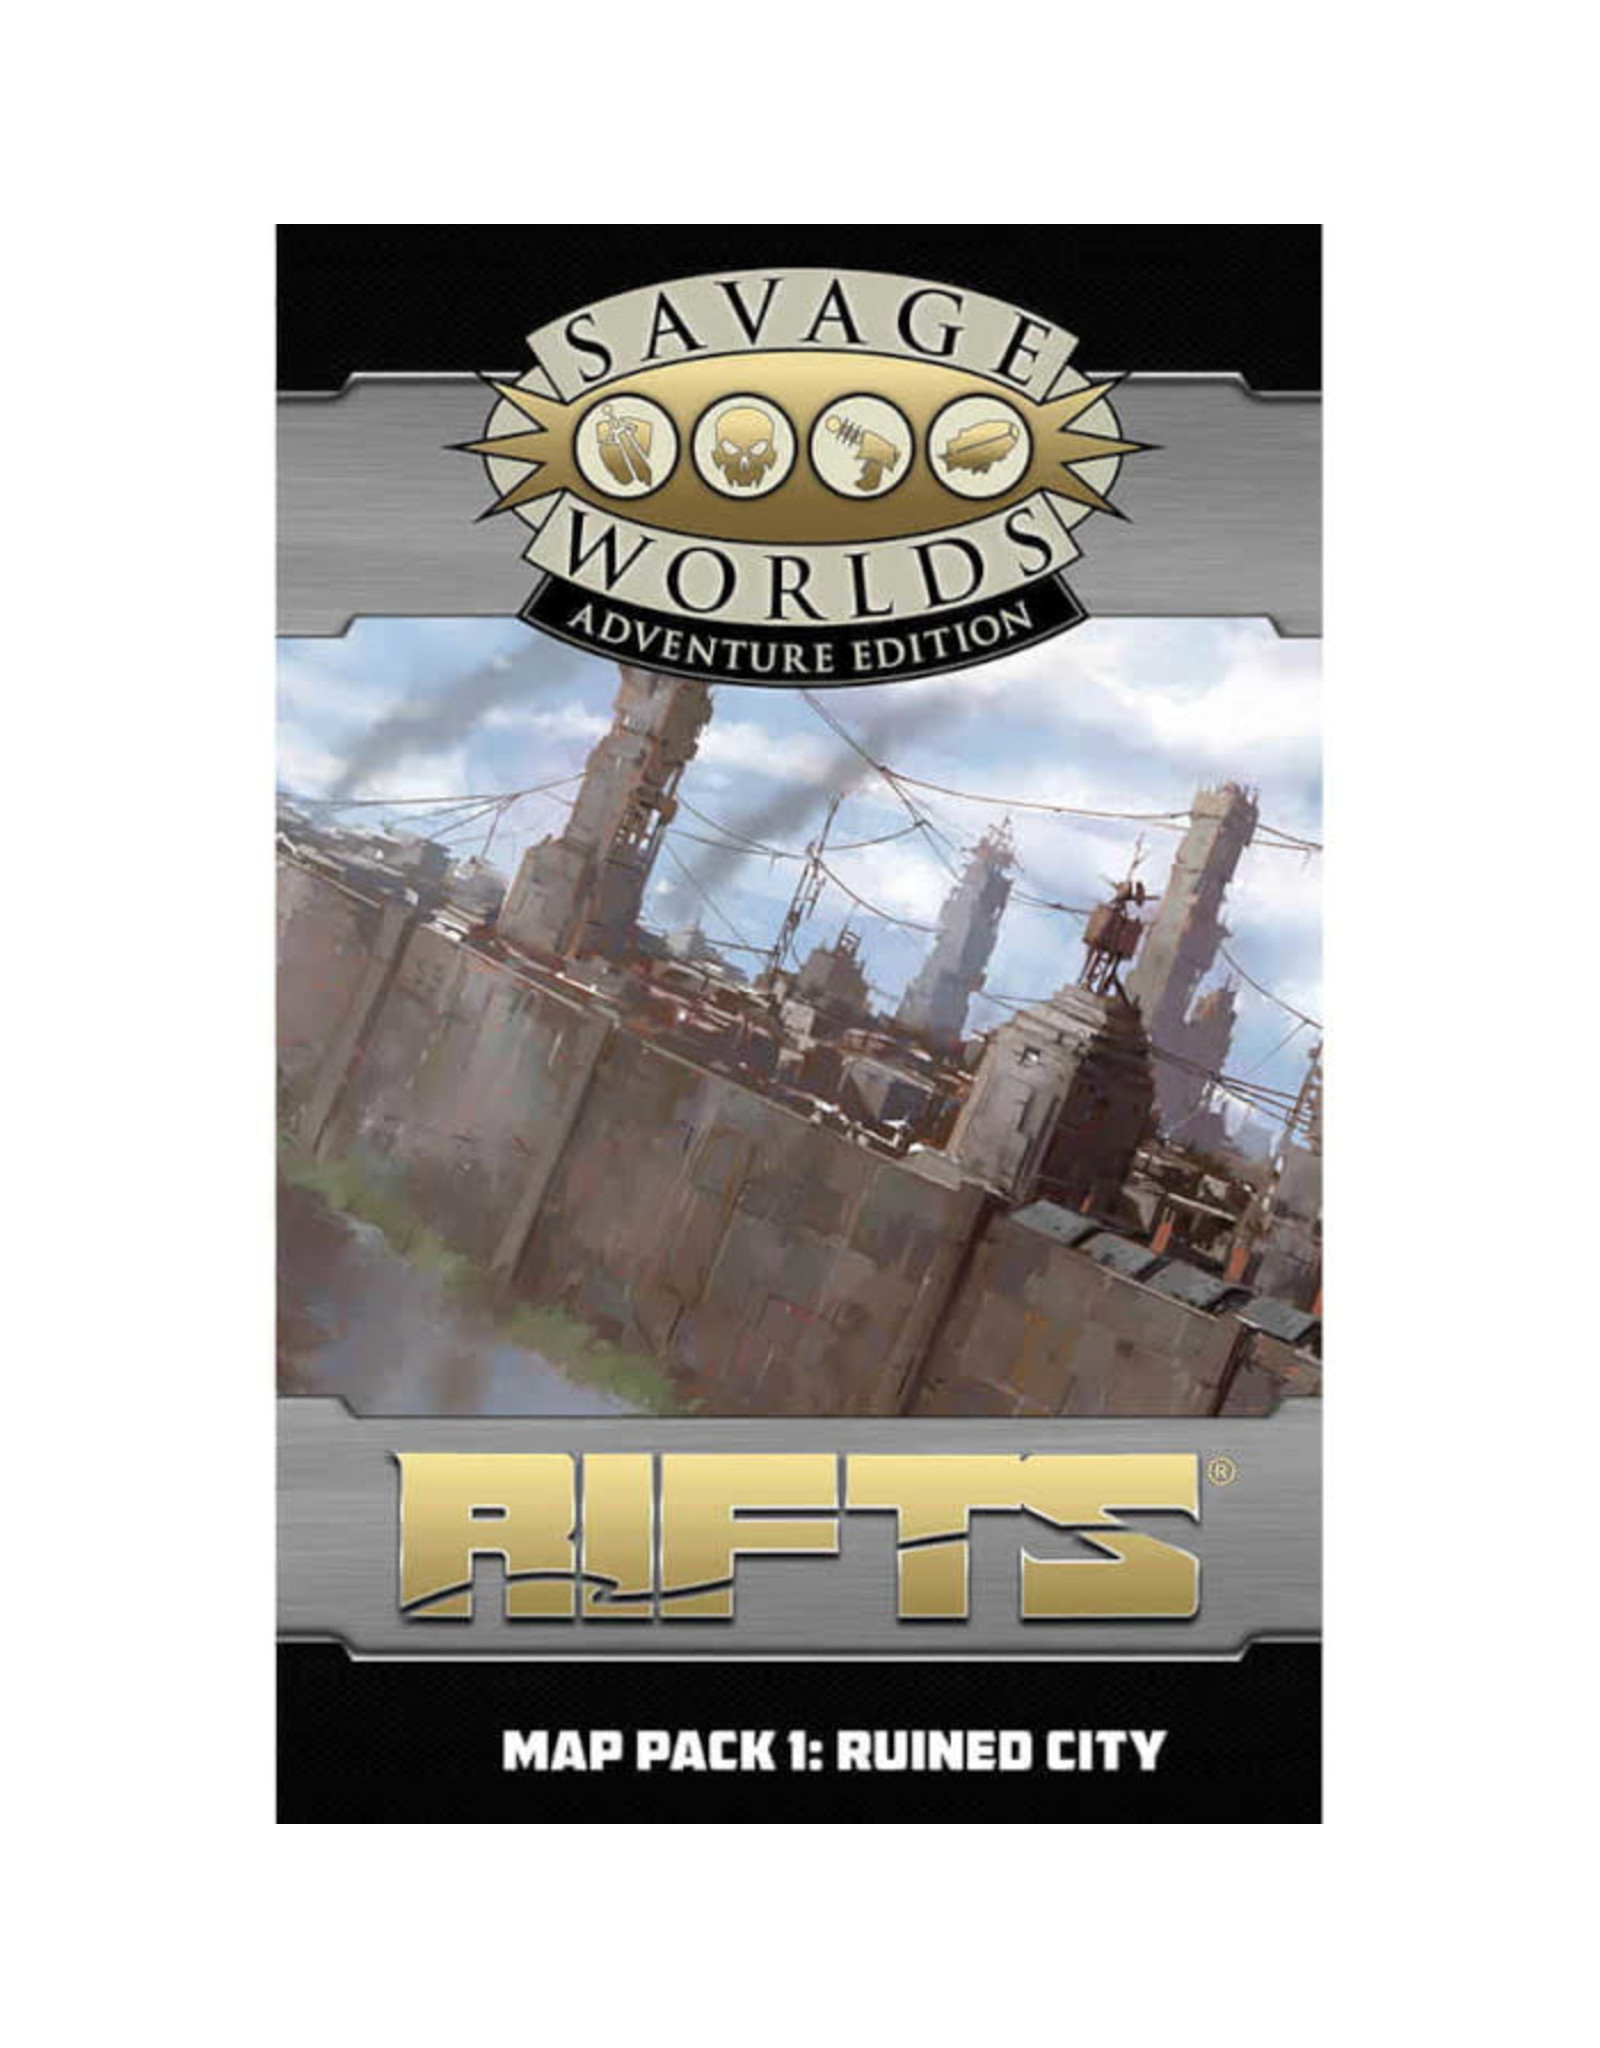 Studio 2 Publishing Savage Worlds RPG: Rifts - Map Pack 1 Ruined City